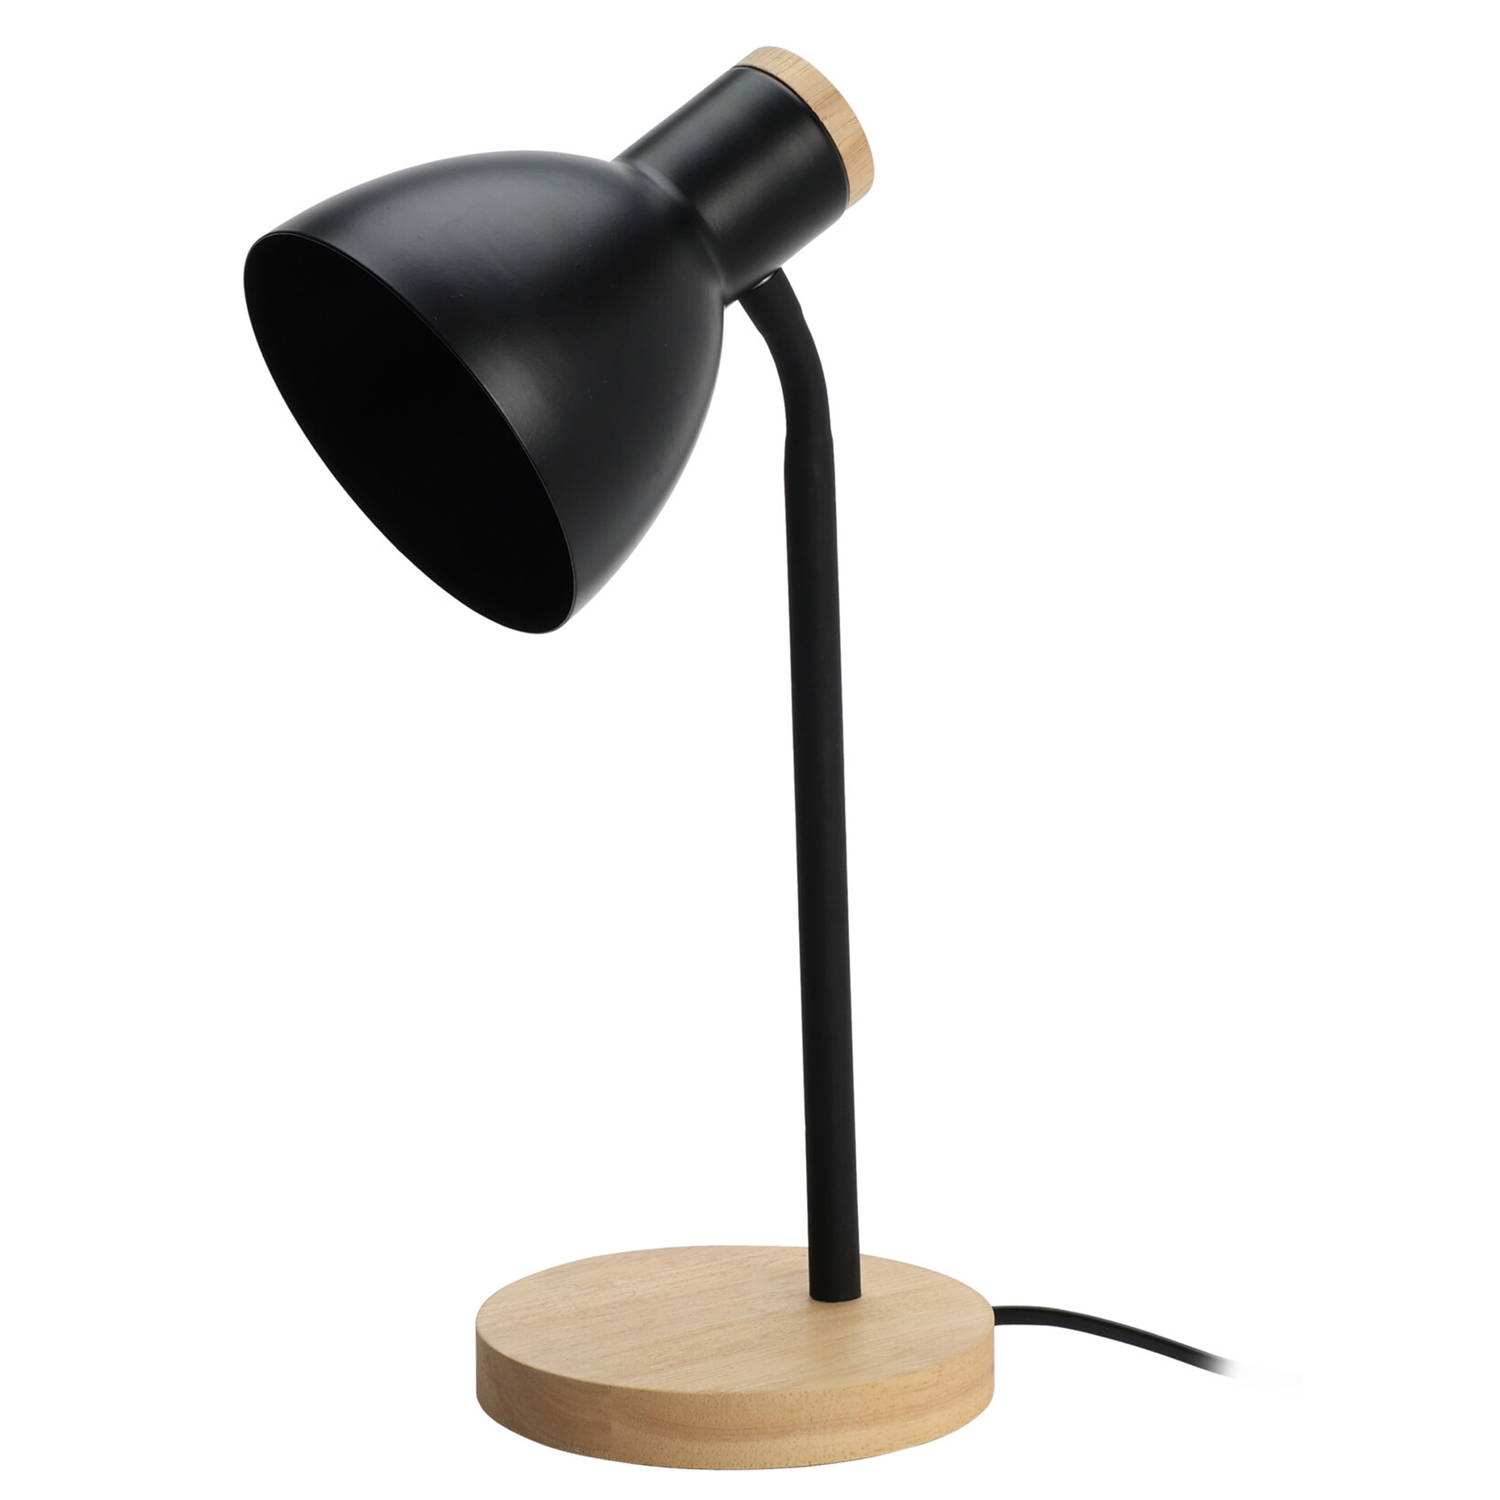 Home & Styling Tafellamp/bureaulampje Design Light - hout/metaal - zwart - H36 cm - Leeslamp - Bureaulampen